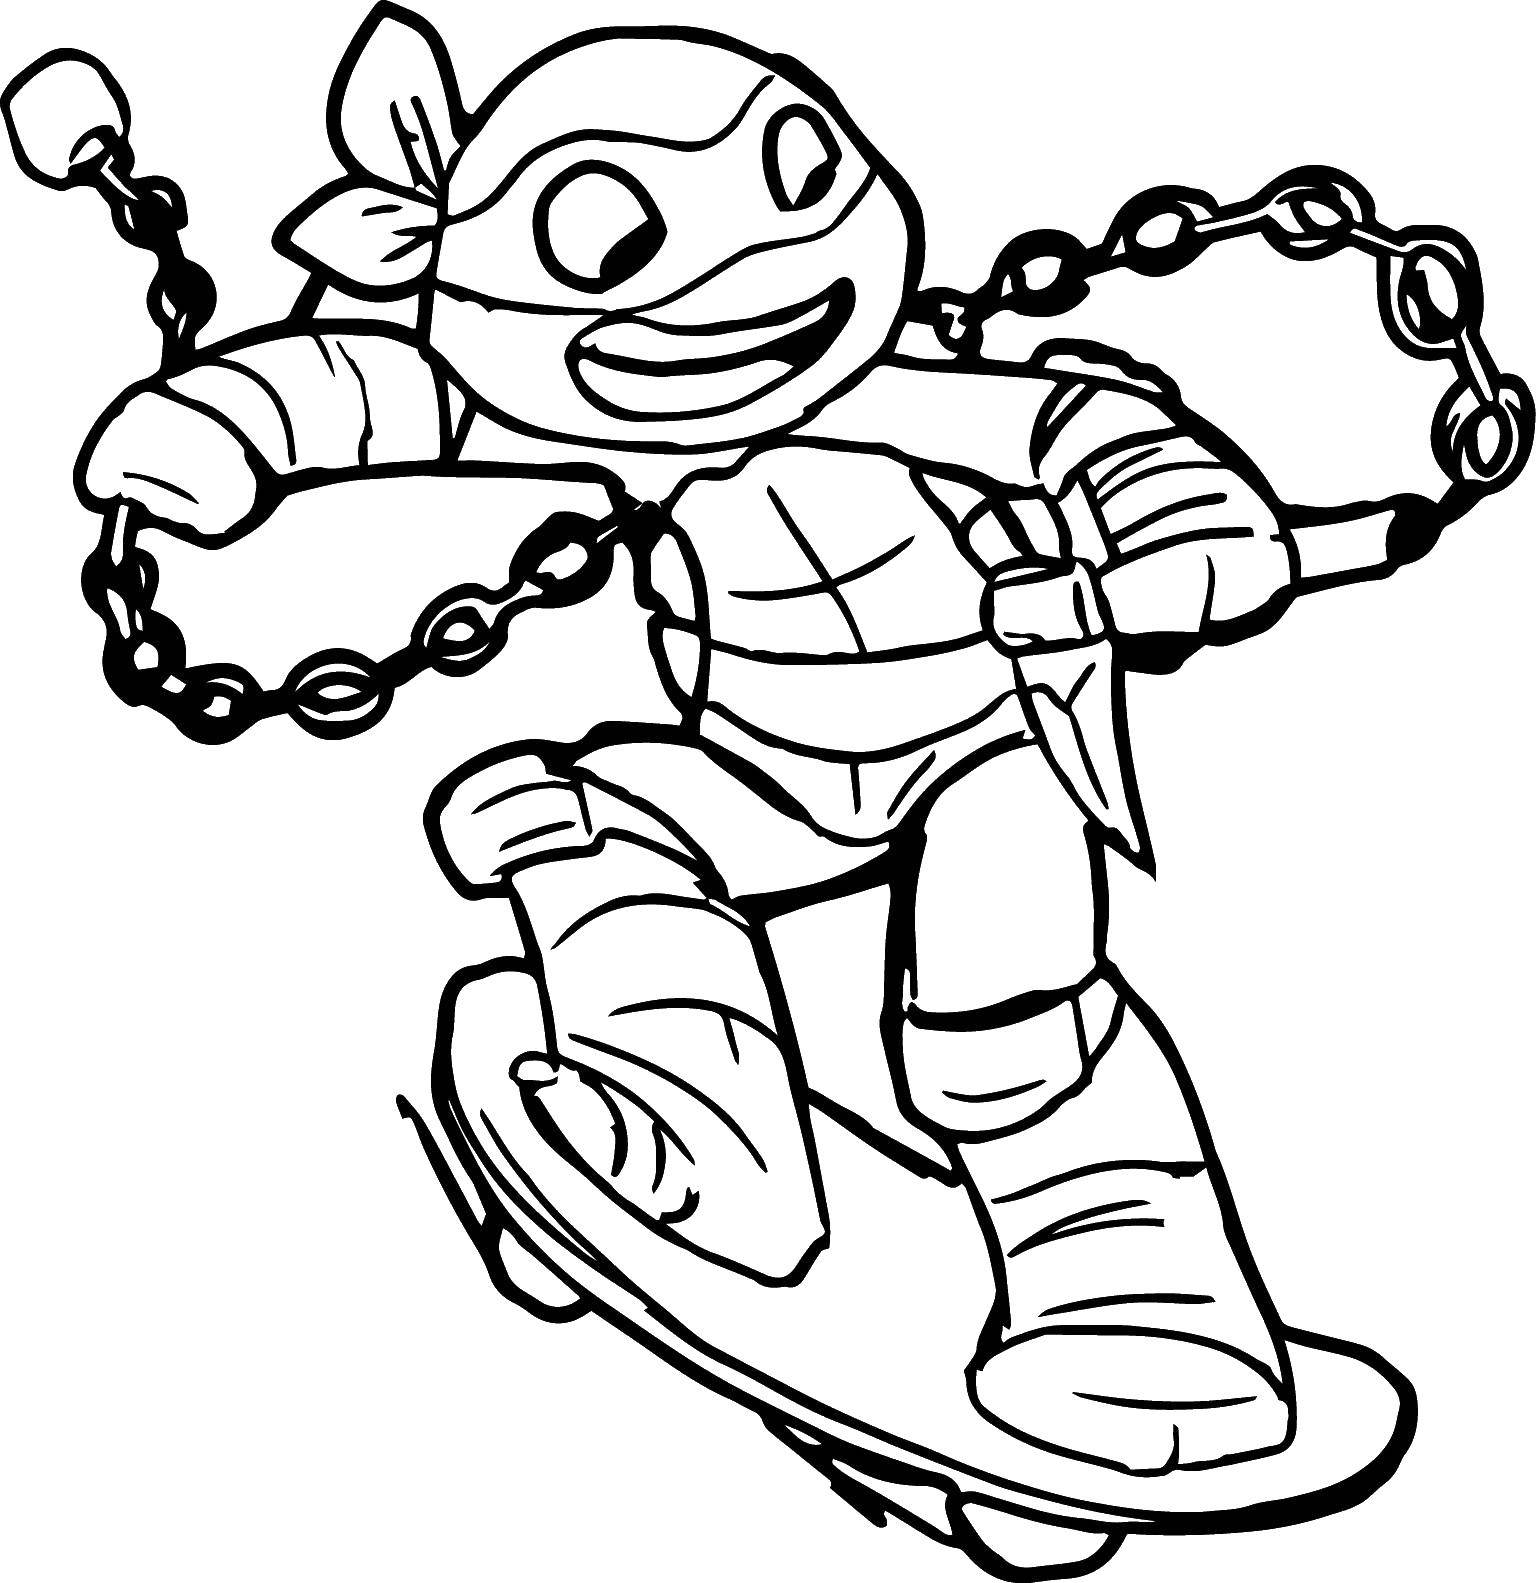 Coloring Michelangelo skateboarding. Category ninja . Tags:  Comics, Teenage Mutant Ninja Turtles.